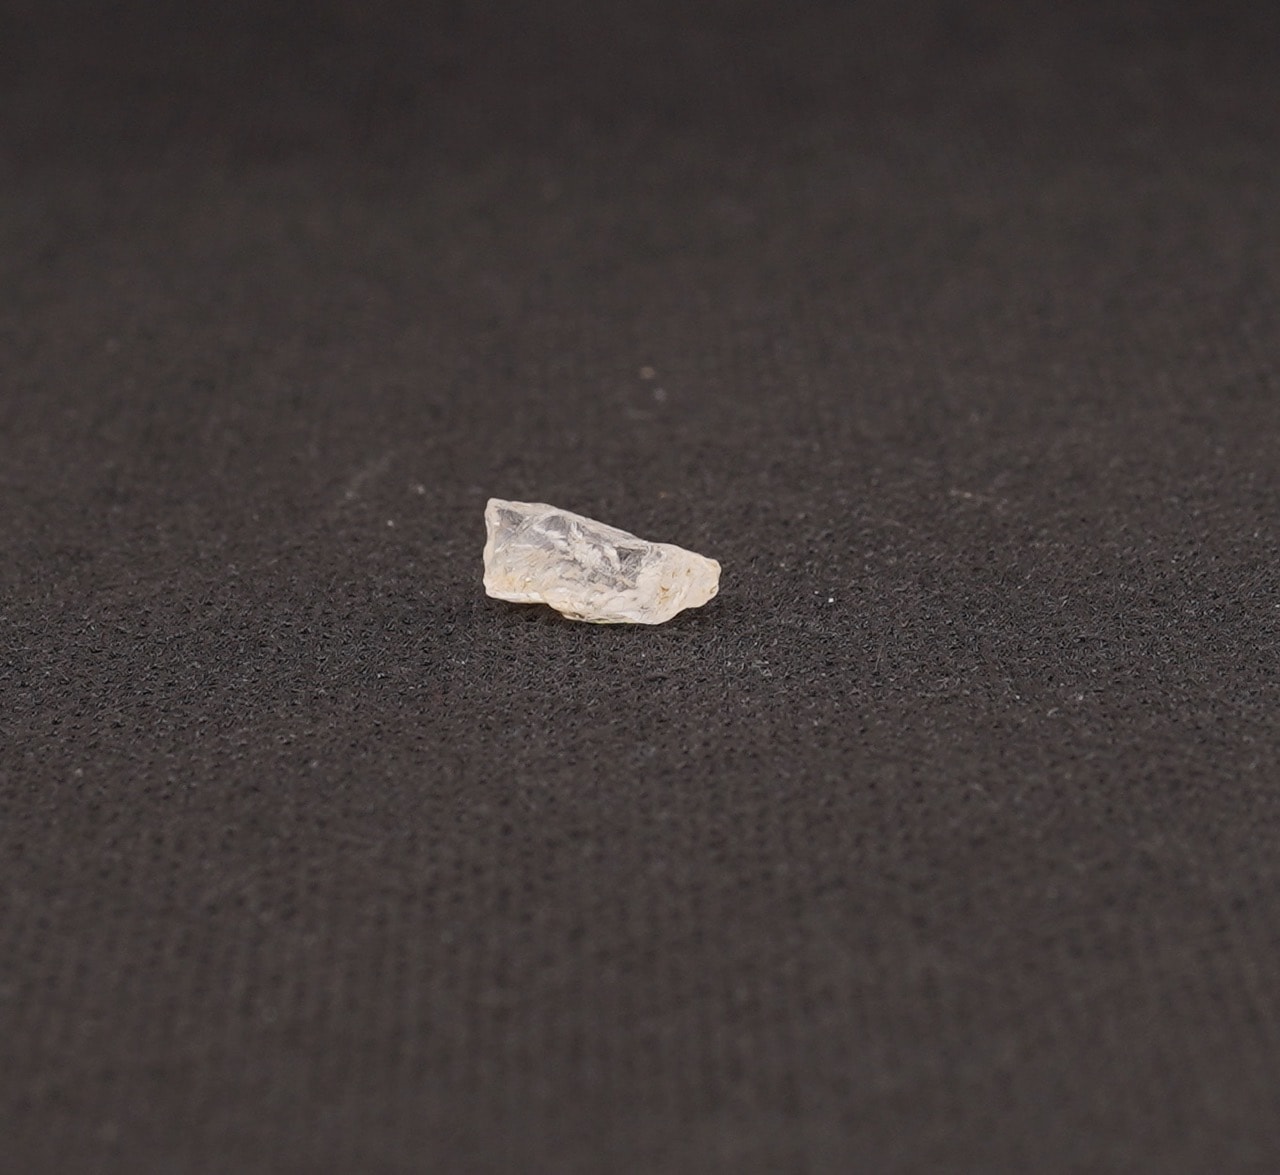 Fenacit nigerian cristal natural unicat f273